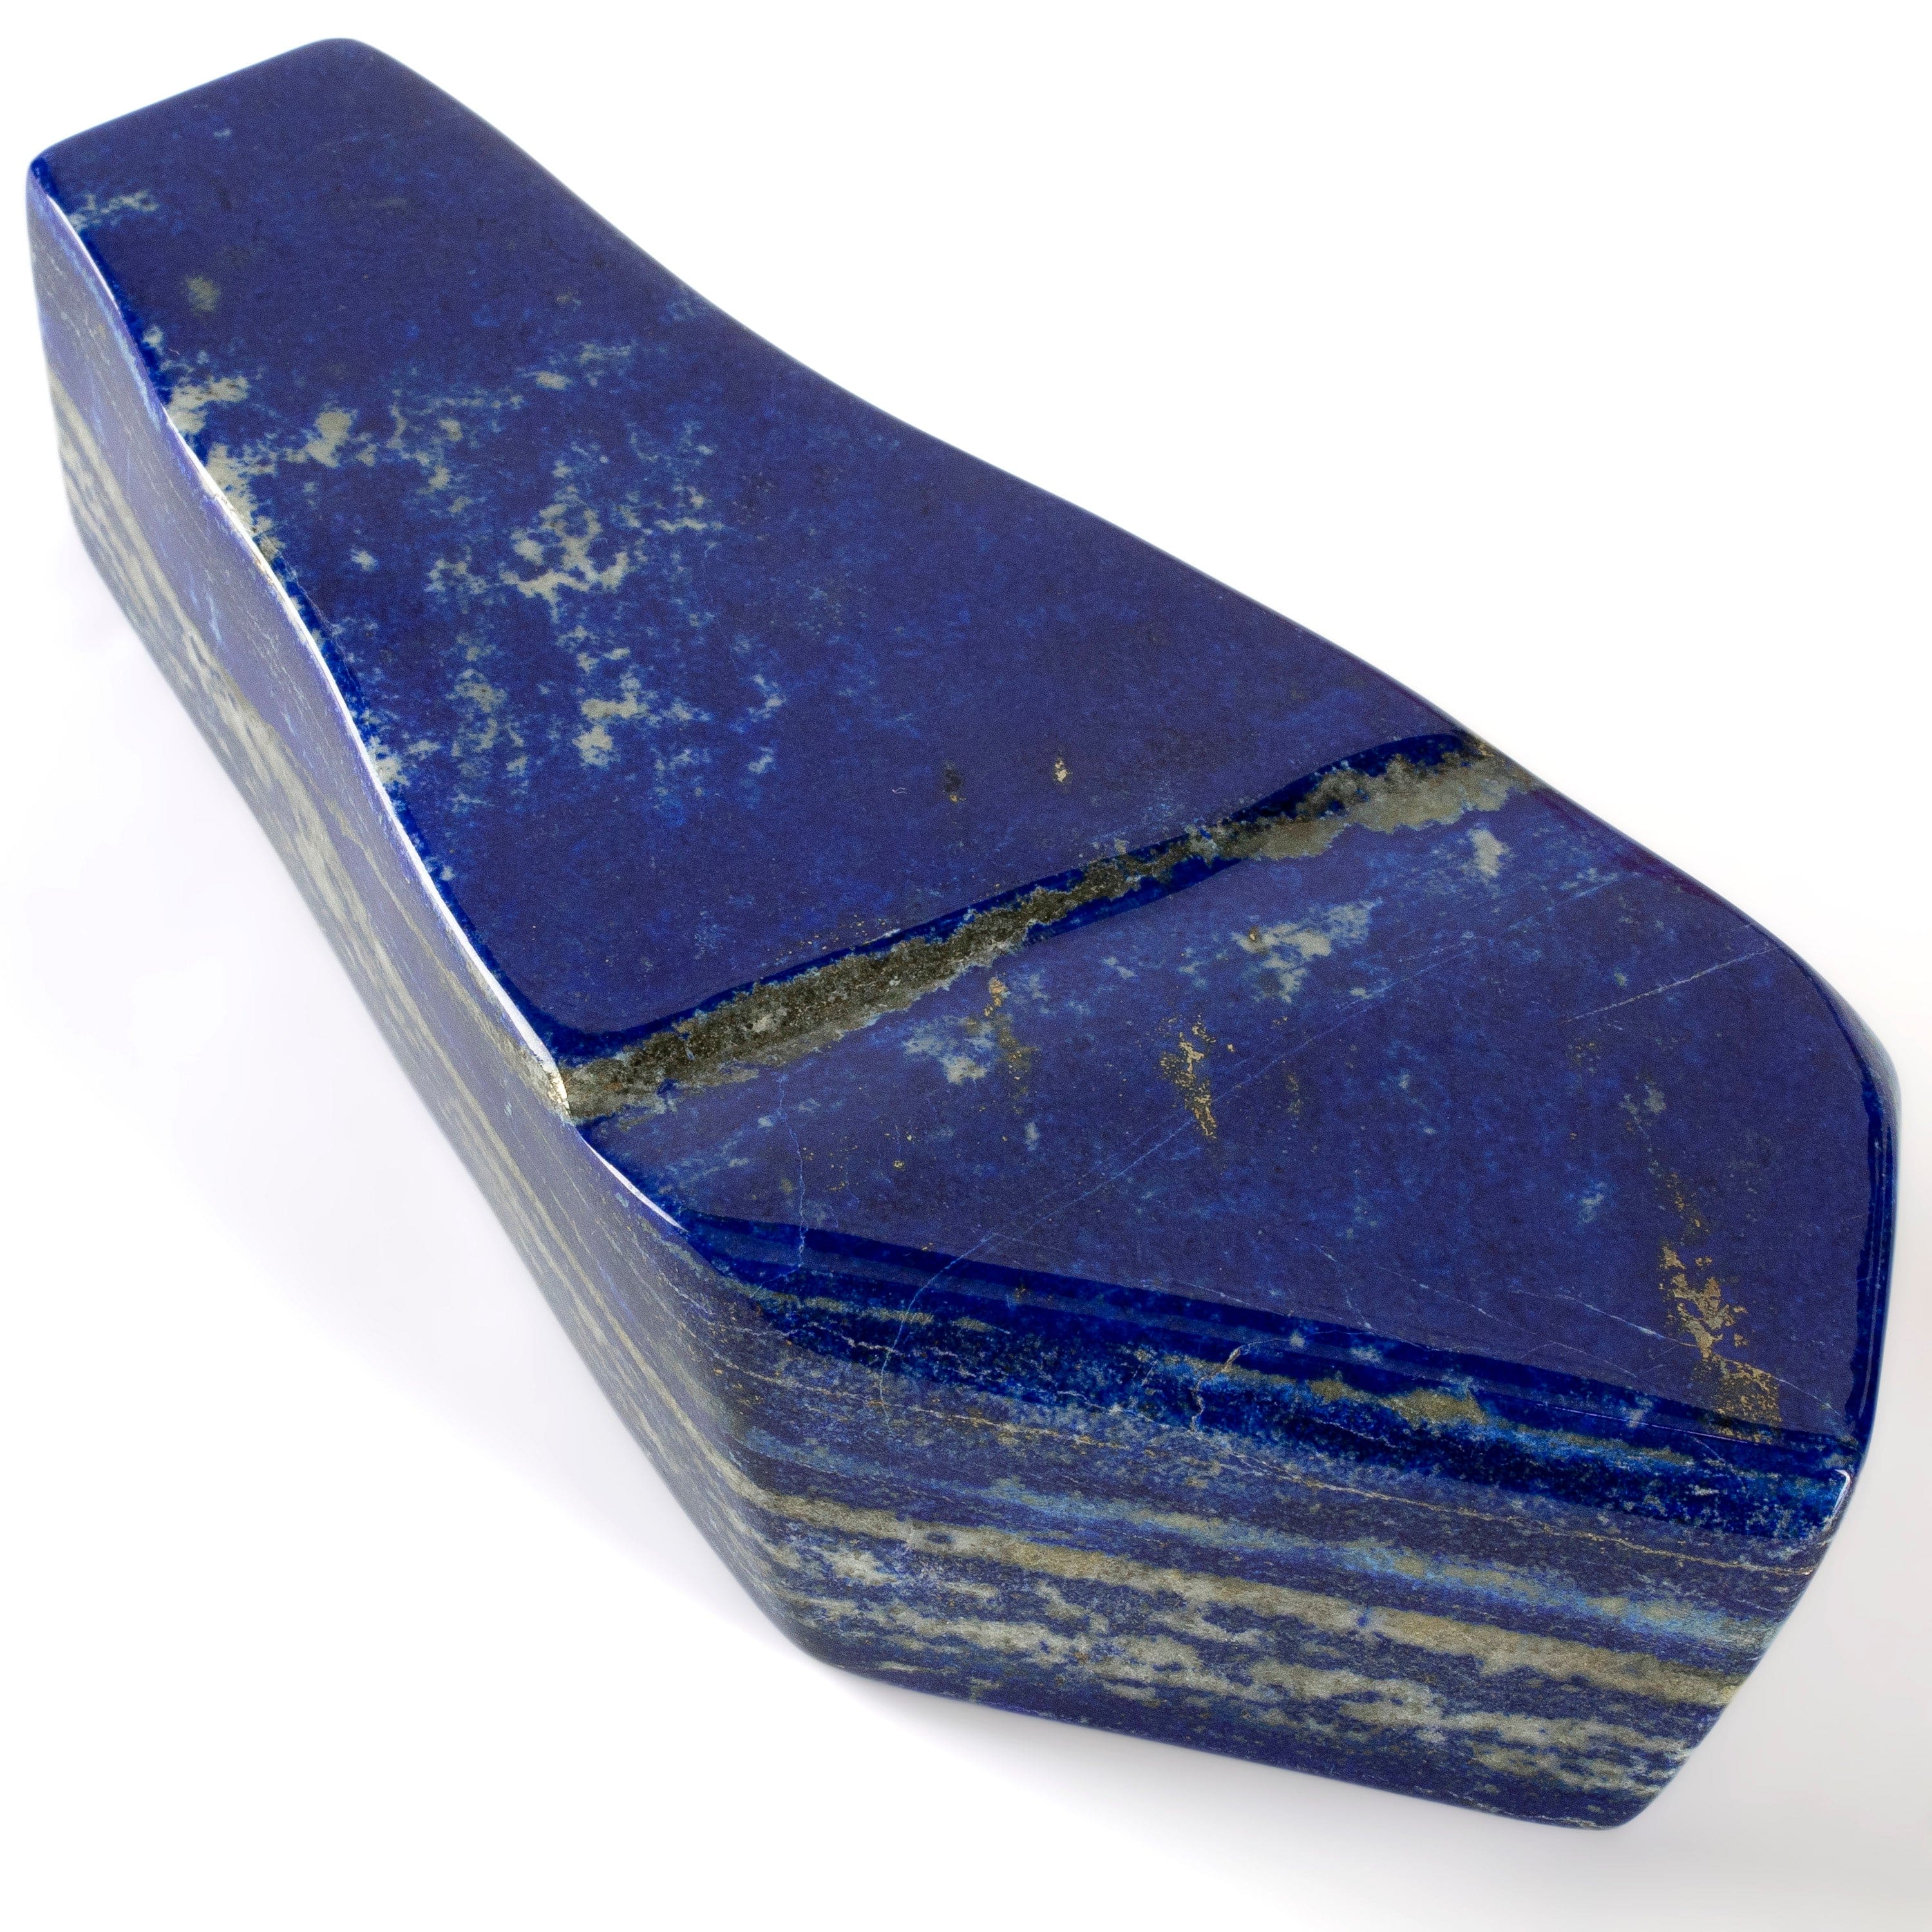 Kalifano Lapis Lapis Lazuli Freeform from Afghanistan - 9" / 2,690 grams LP2700.002